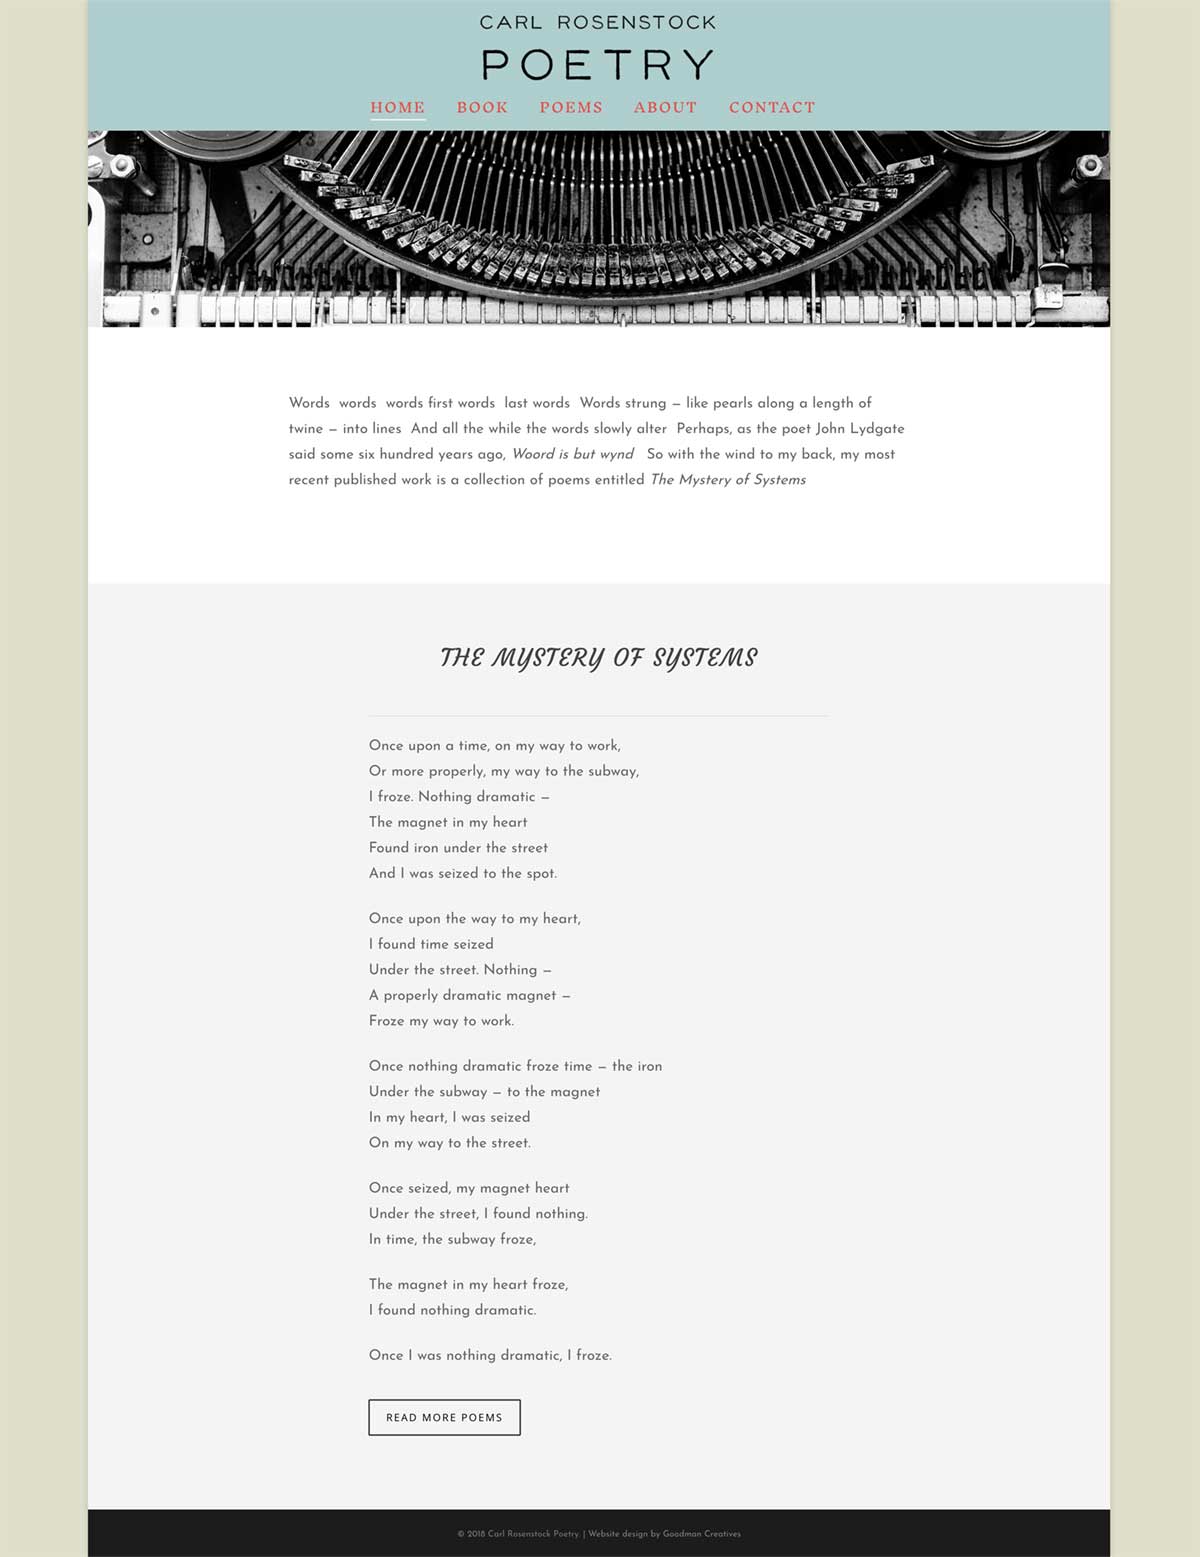 carl-rosenstock-poetry-web-design